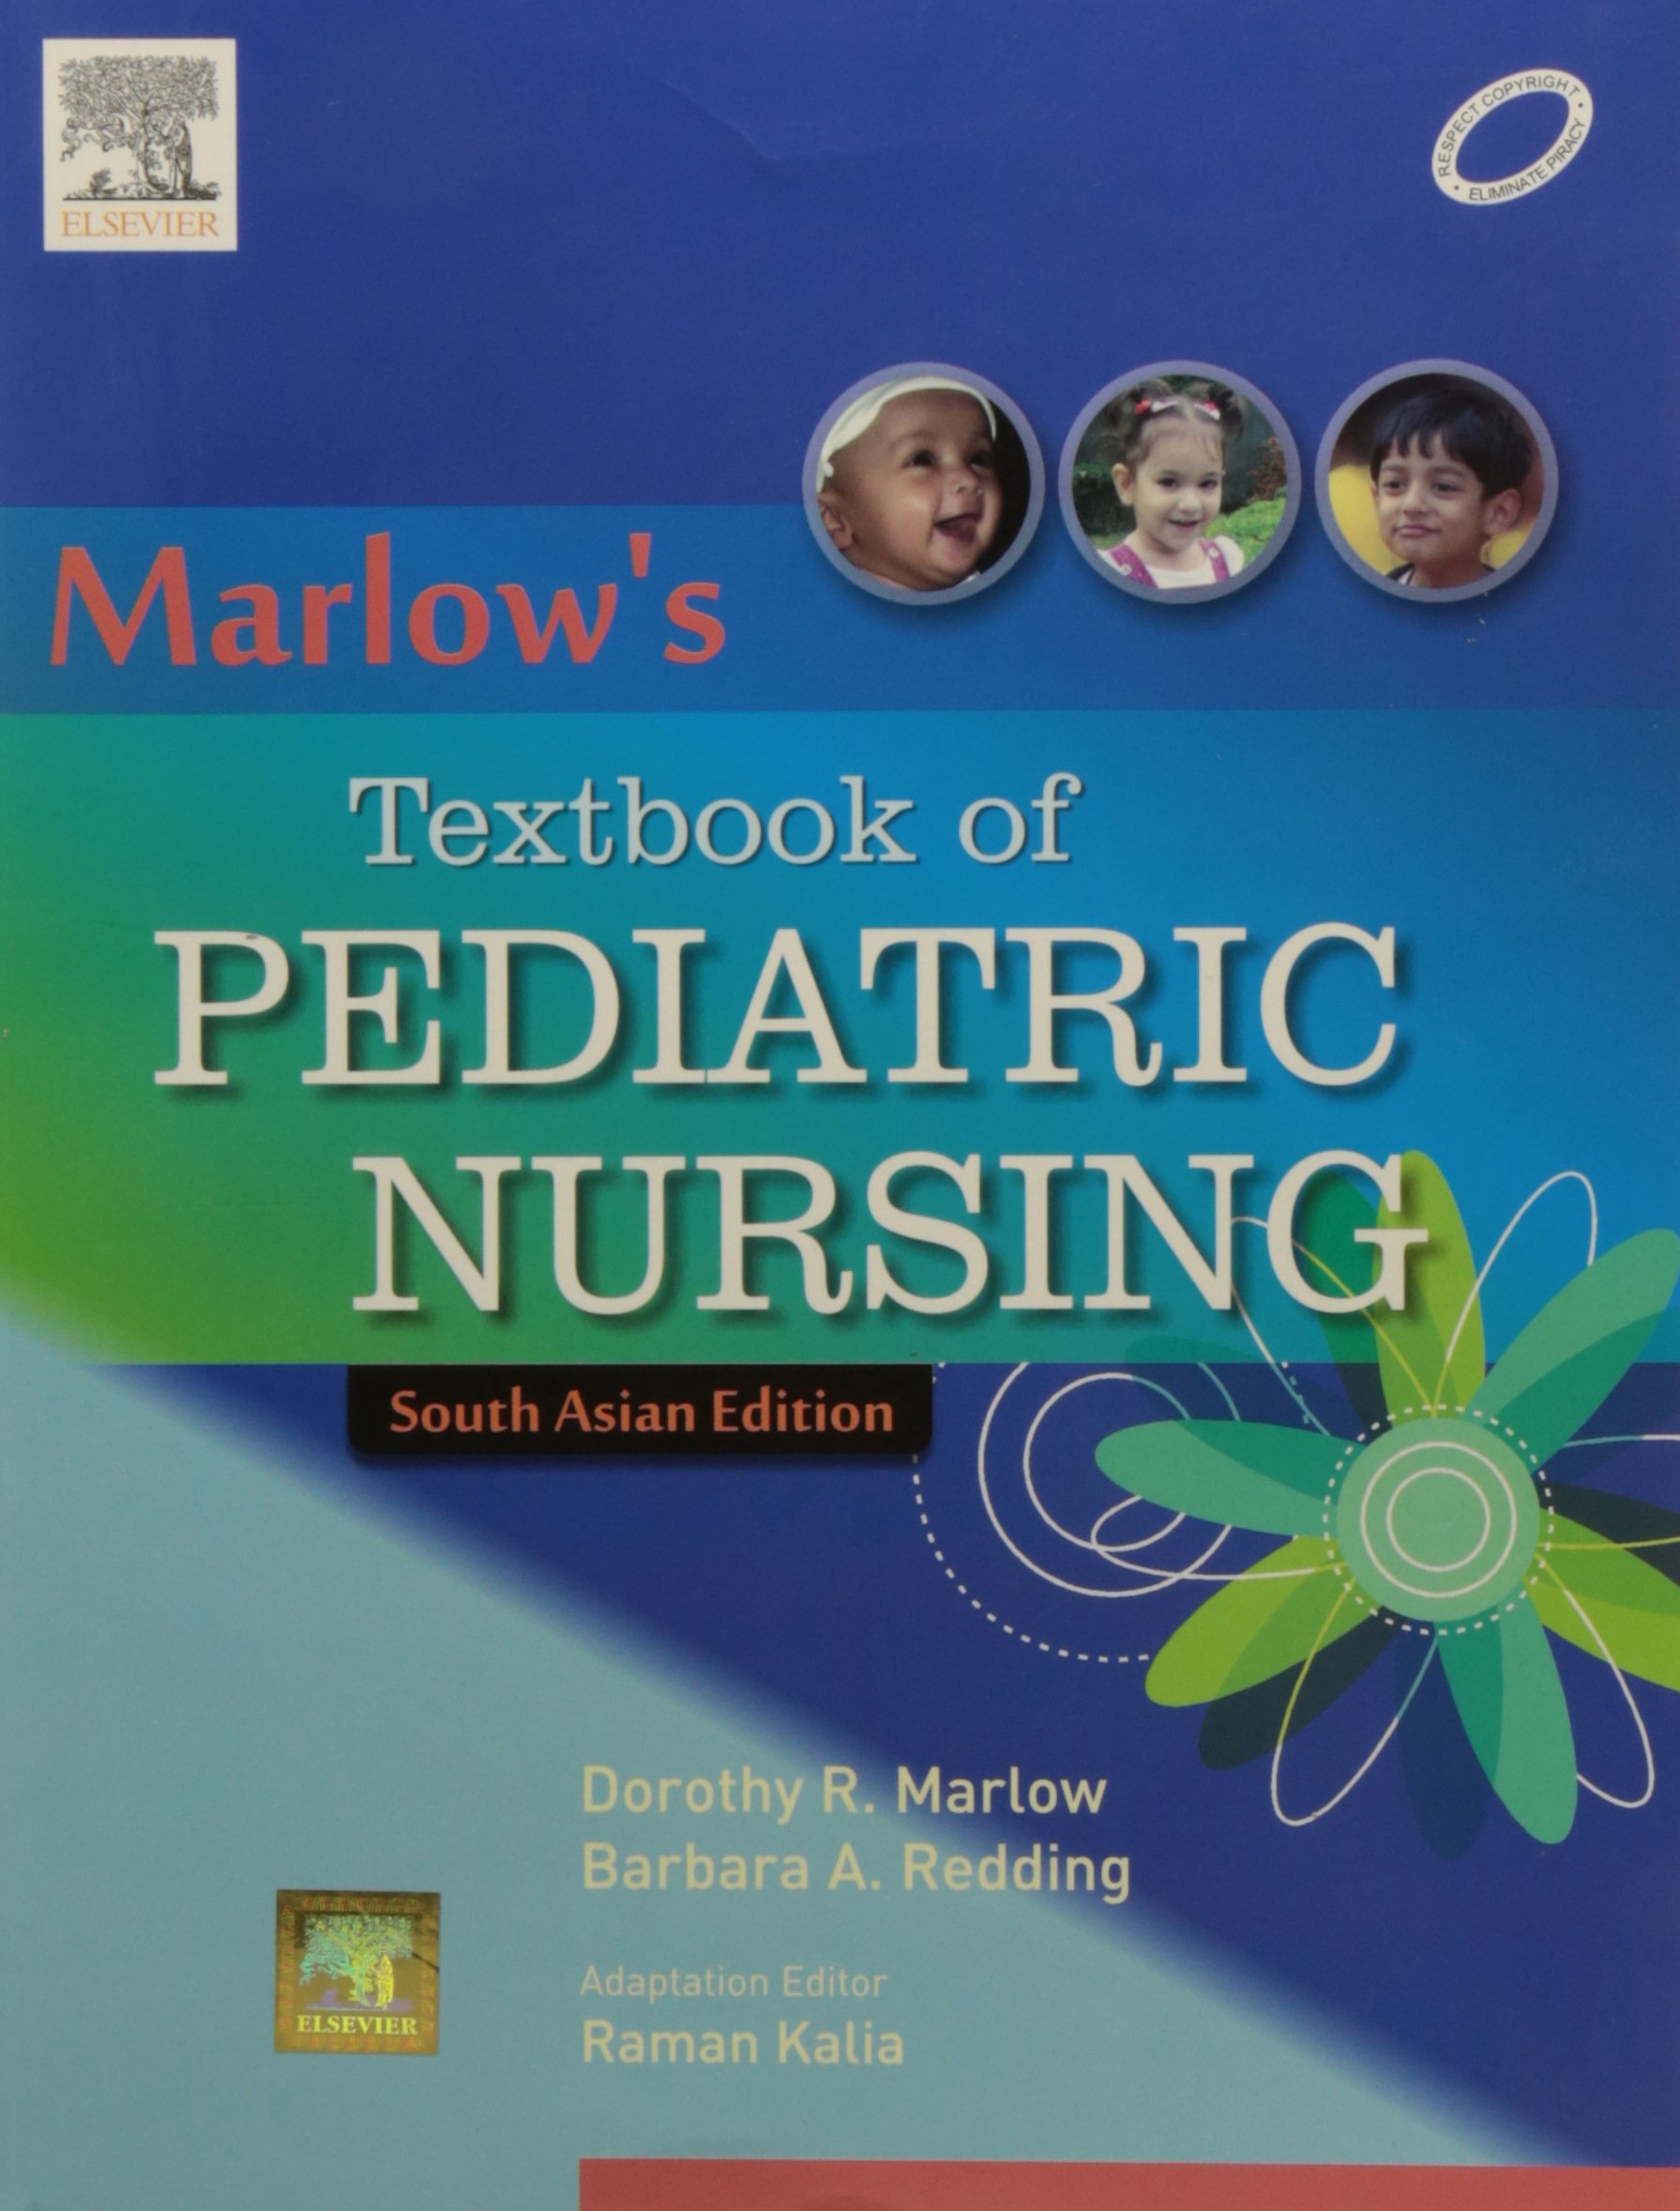 Textbook of Pediatric Nursing : South Asian Edition: Adaptation